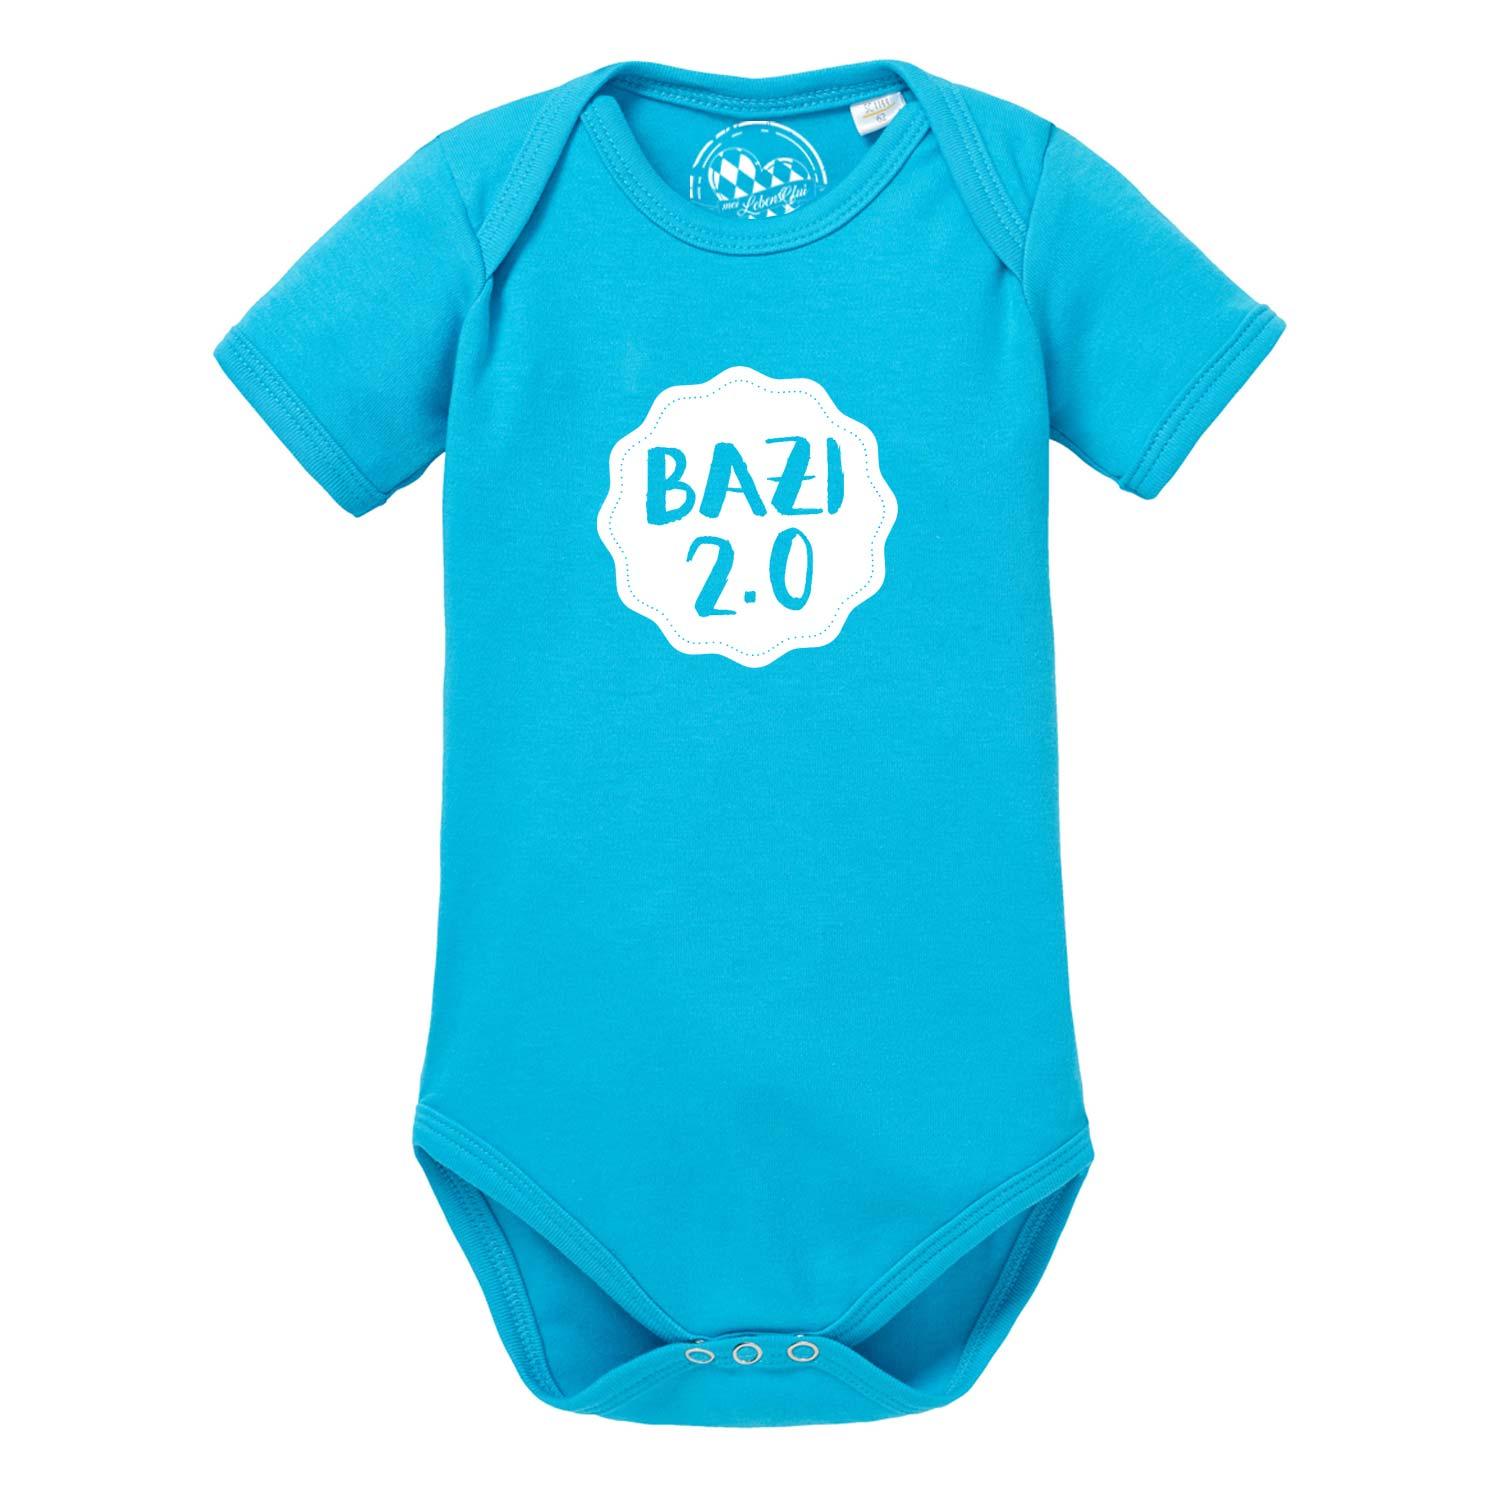 Baby Body "Bazi 2.0" - bavariashop - mei LebensGfui